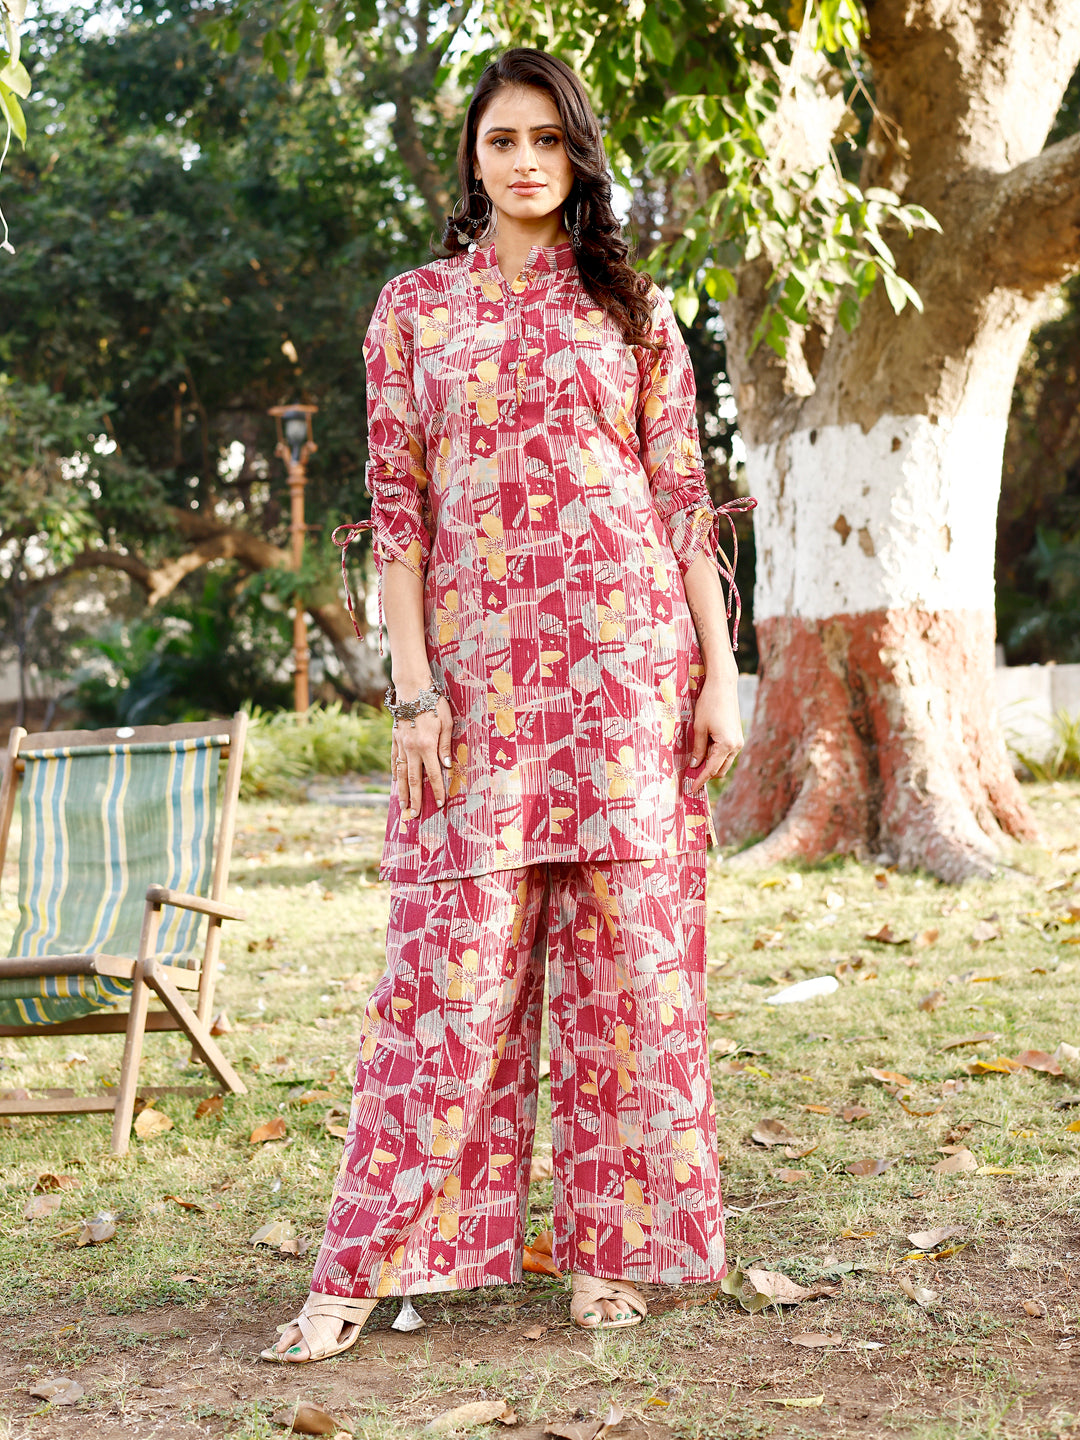 This Summer Season Beautiful Model Silk Co-Ord Dresses Dori Design Sleeve For Women's